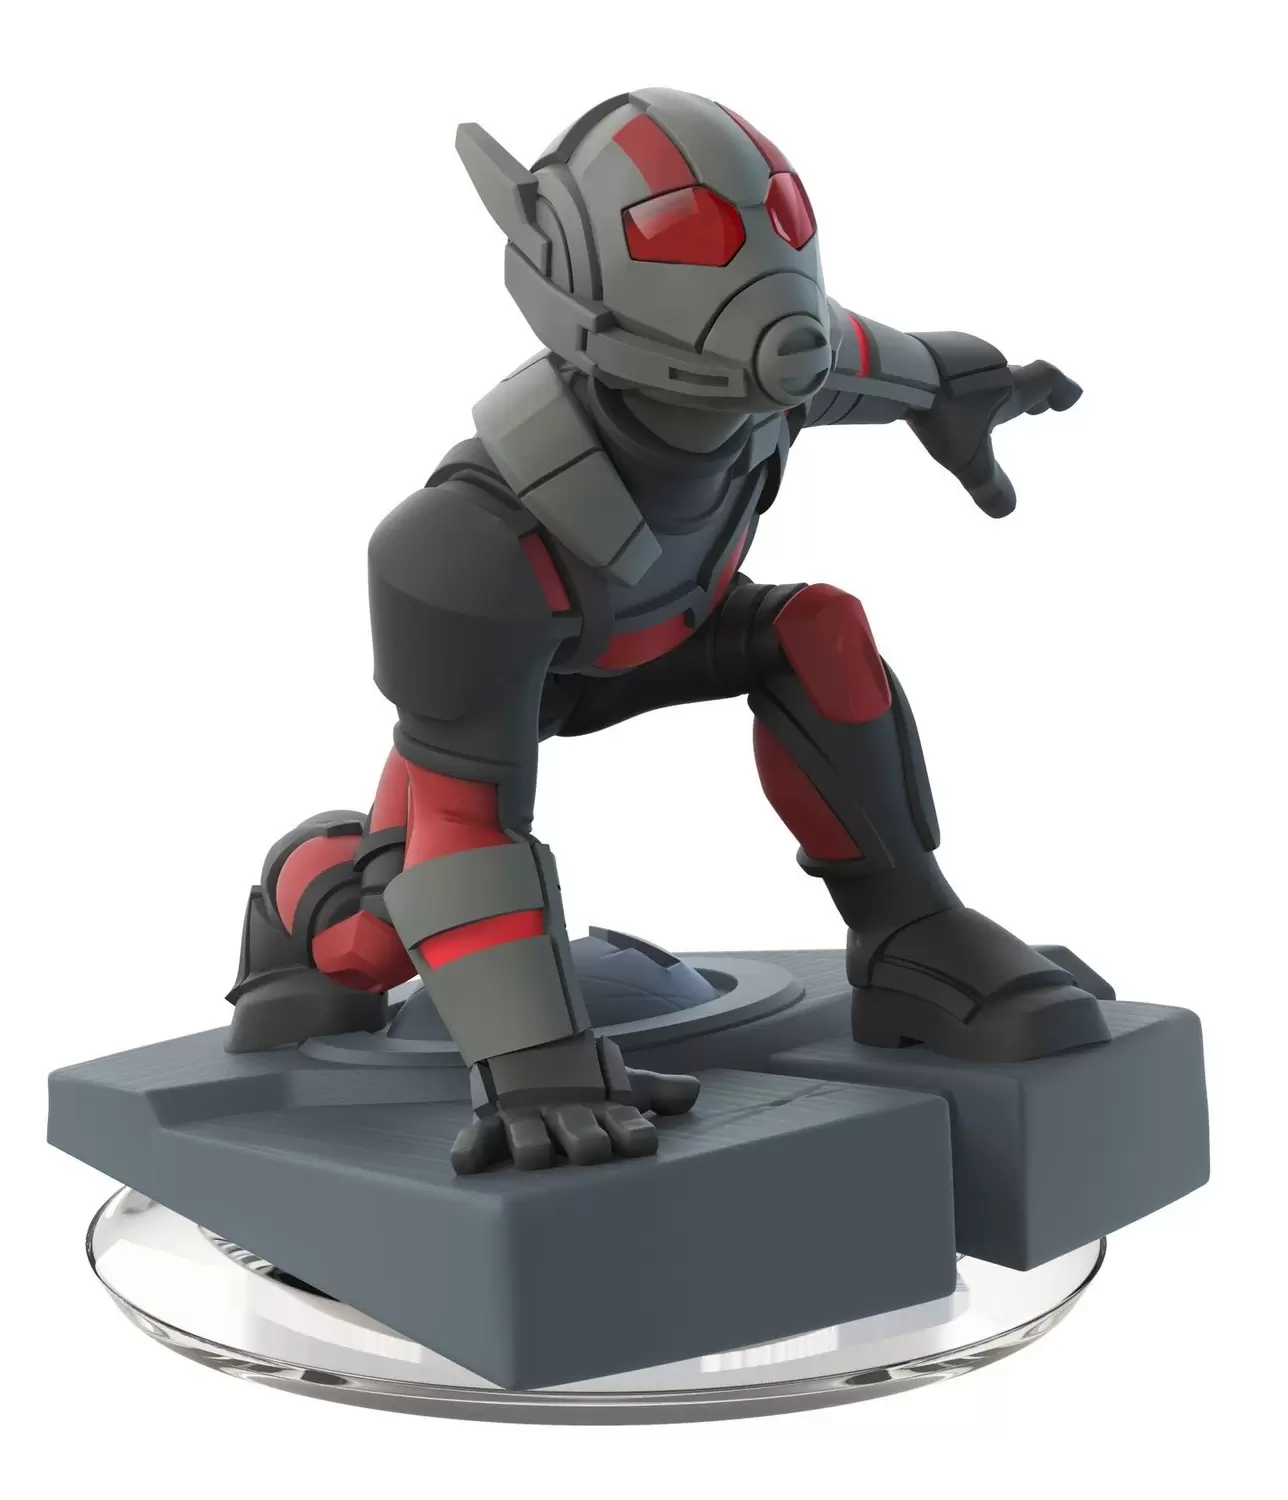 Disney Infinity Action figures - Ant-Man